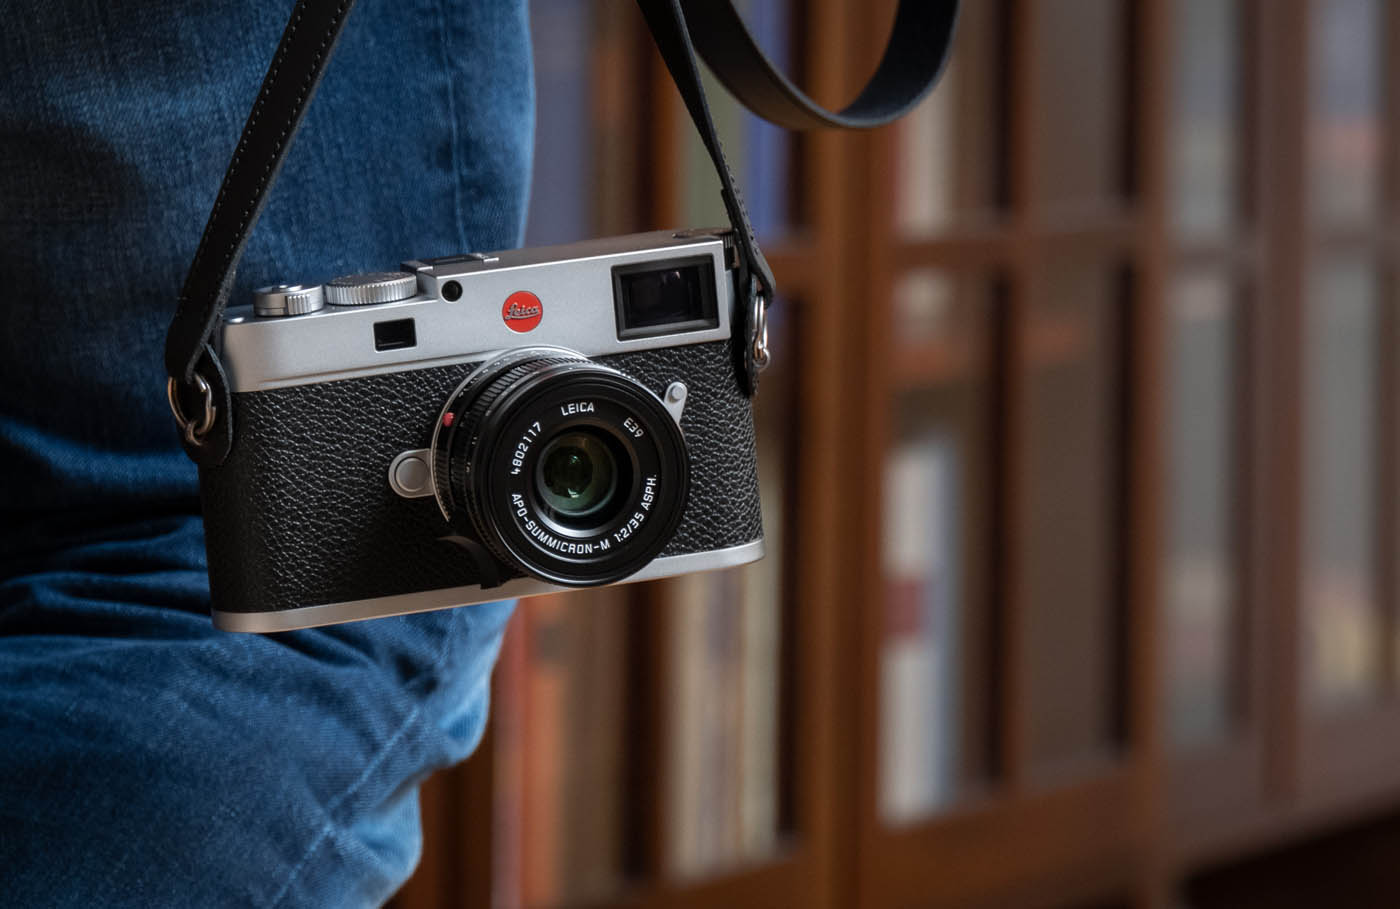 Leica M11 : Toujours le Meilleur Appareil Photo Selon DxOMark